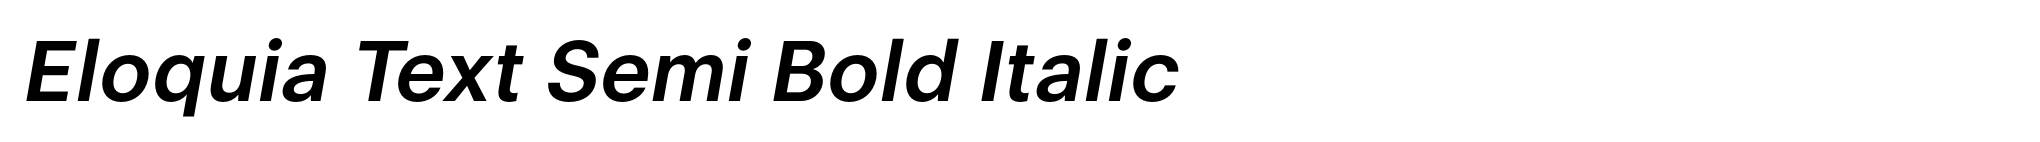 Eloquia Text Semi Bold Italic image